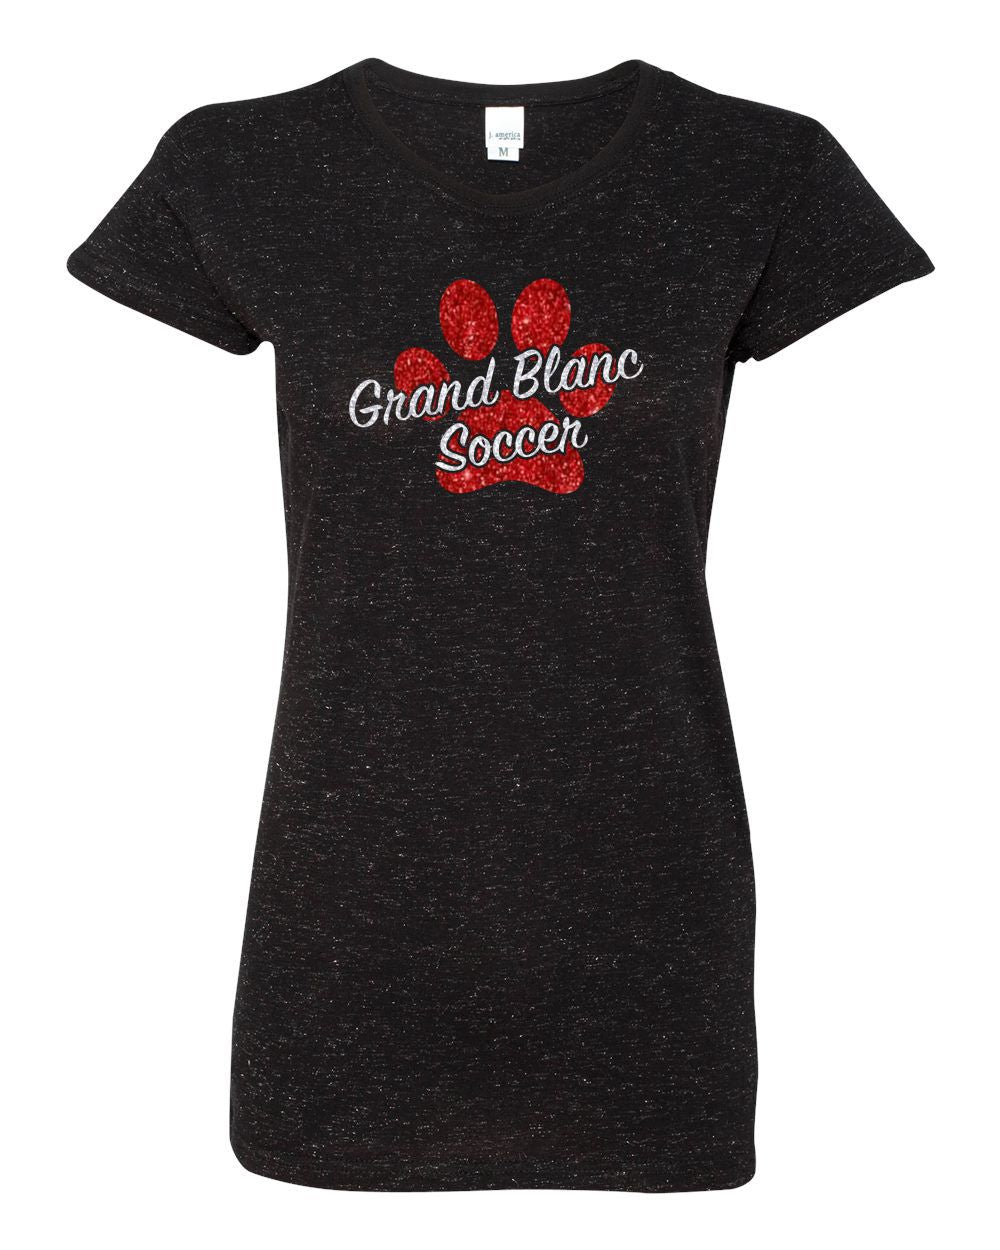 Grand Blanc Soccer Glitter-on-Glitter Ladies T-shirt